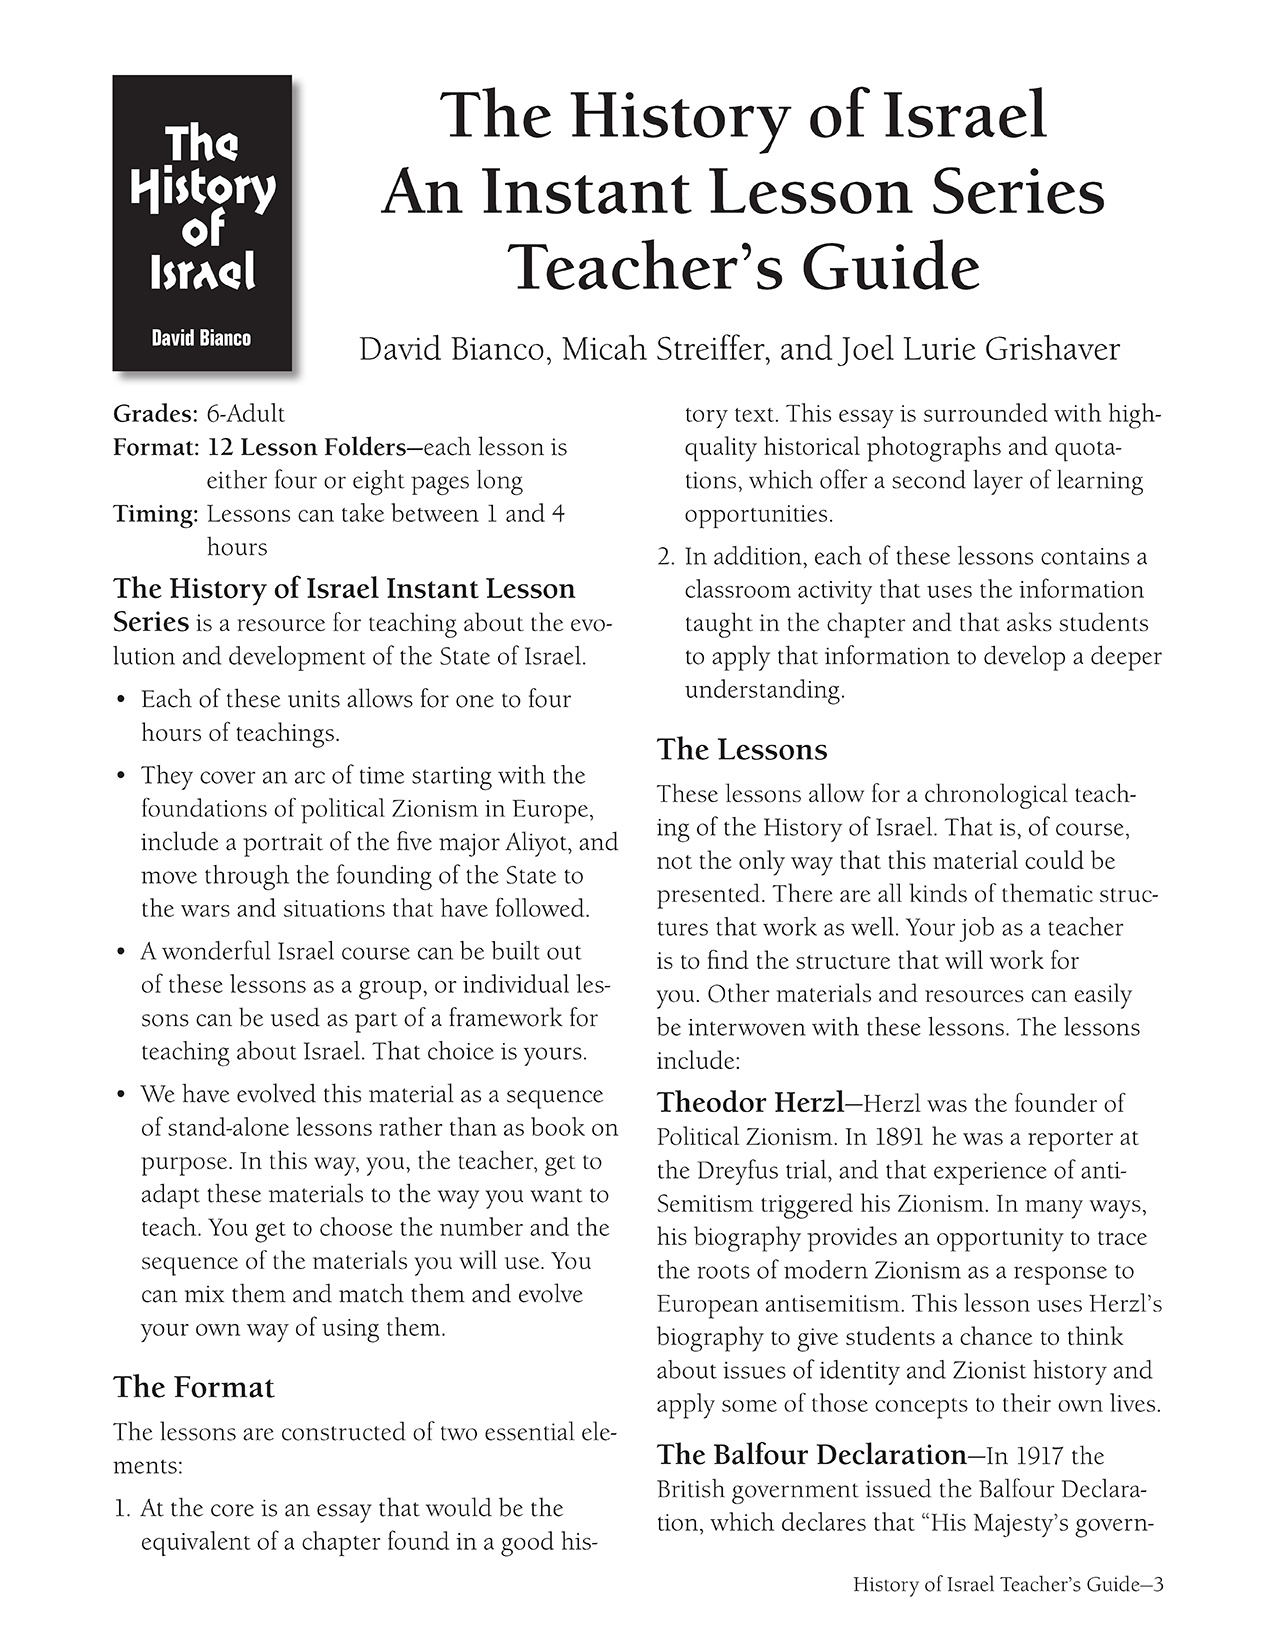 History of Israel: Teacher's Guide